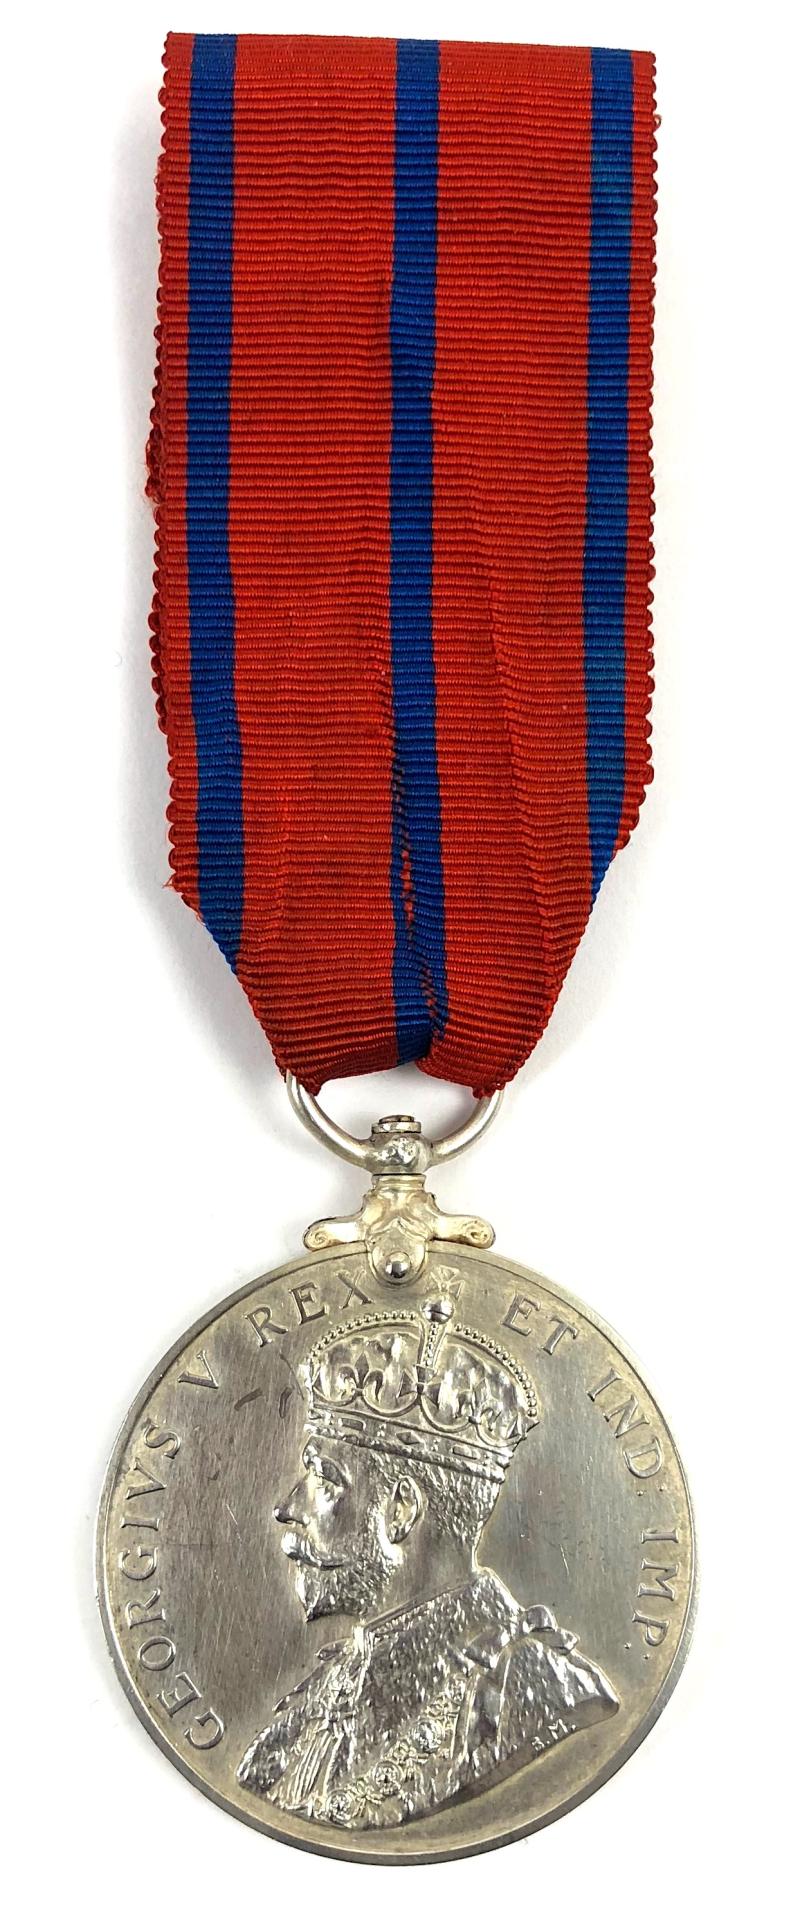 Coronation Police Medal 1911 for Scottish Police